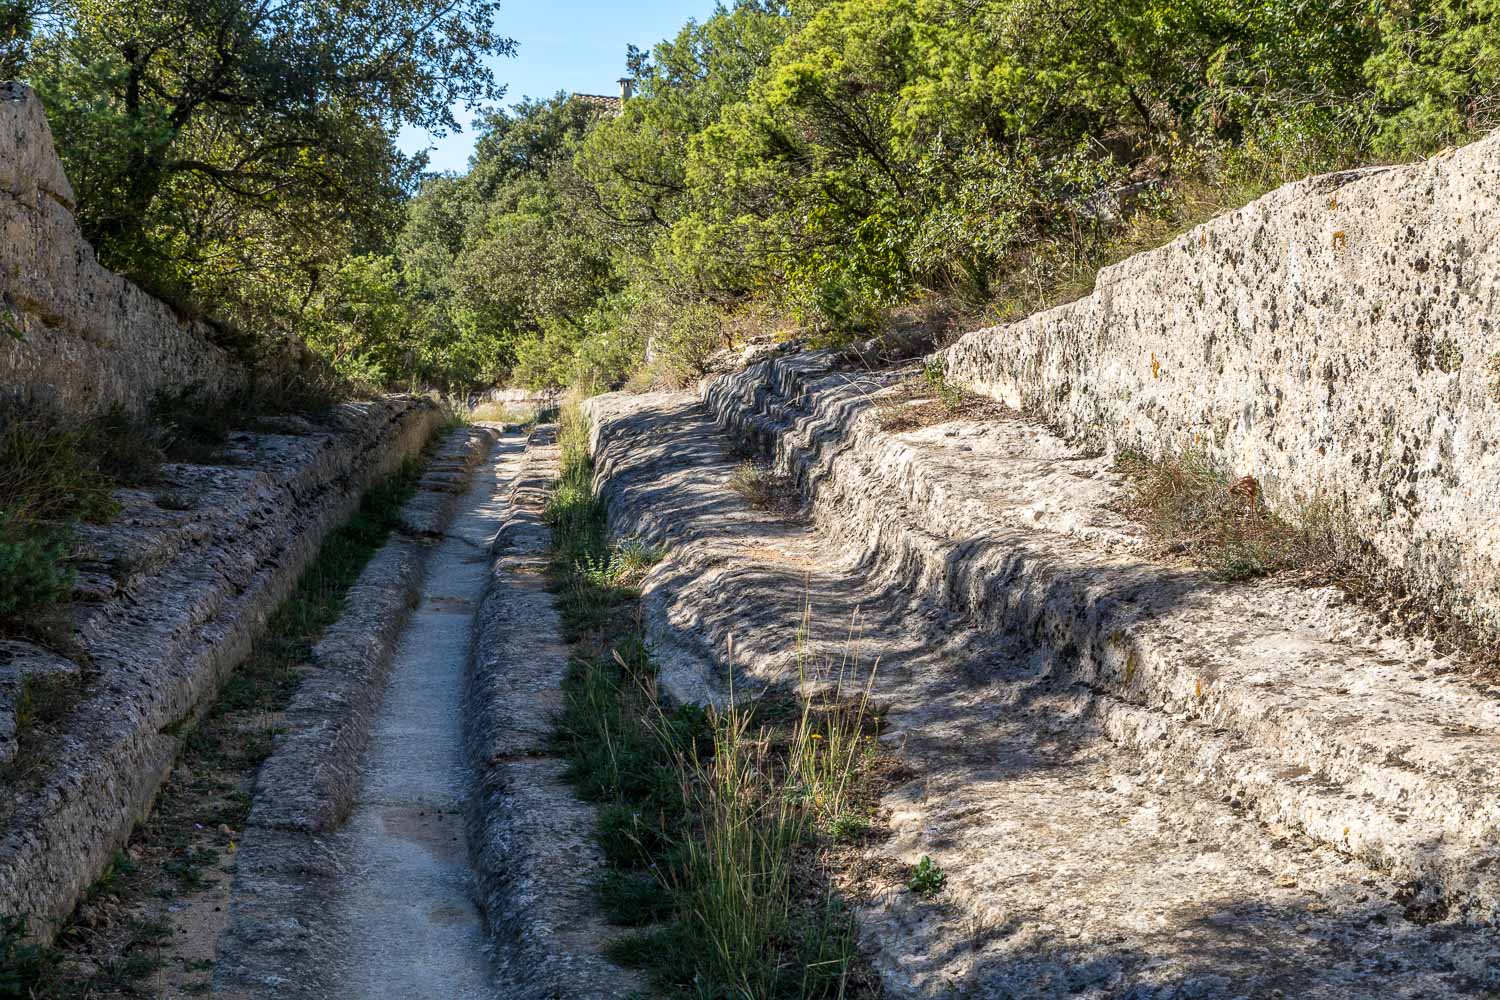 Vers-Pont-du-Gard stone quarries